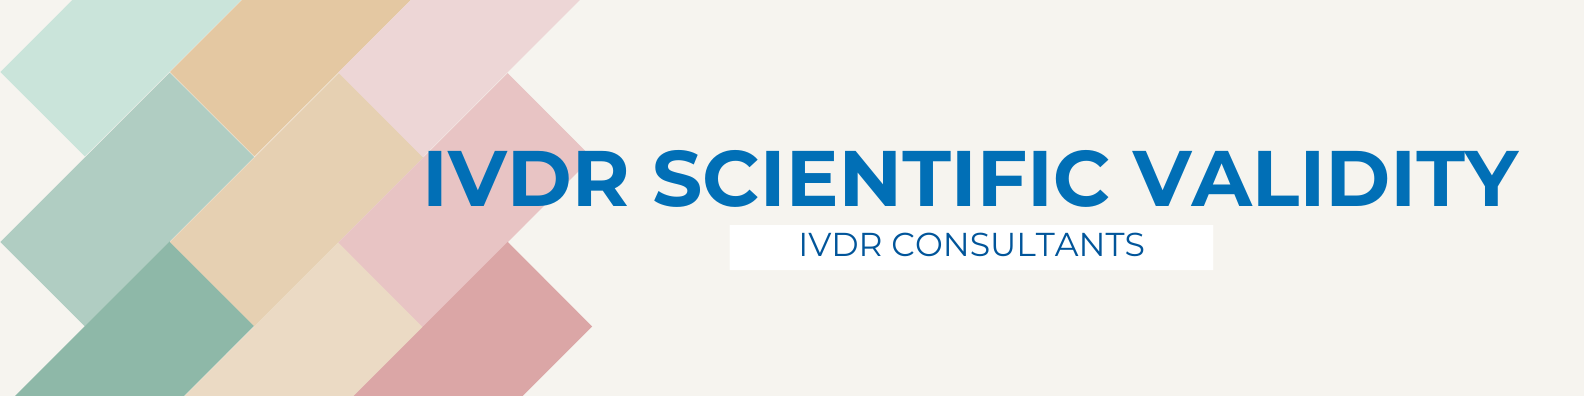 IVDR SCIENTIFIC VALIDITY